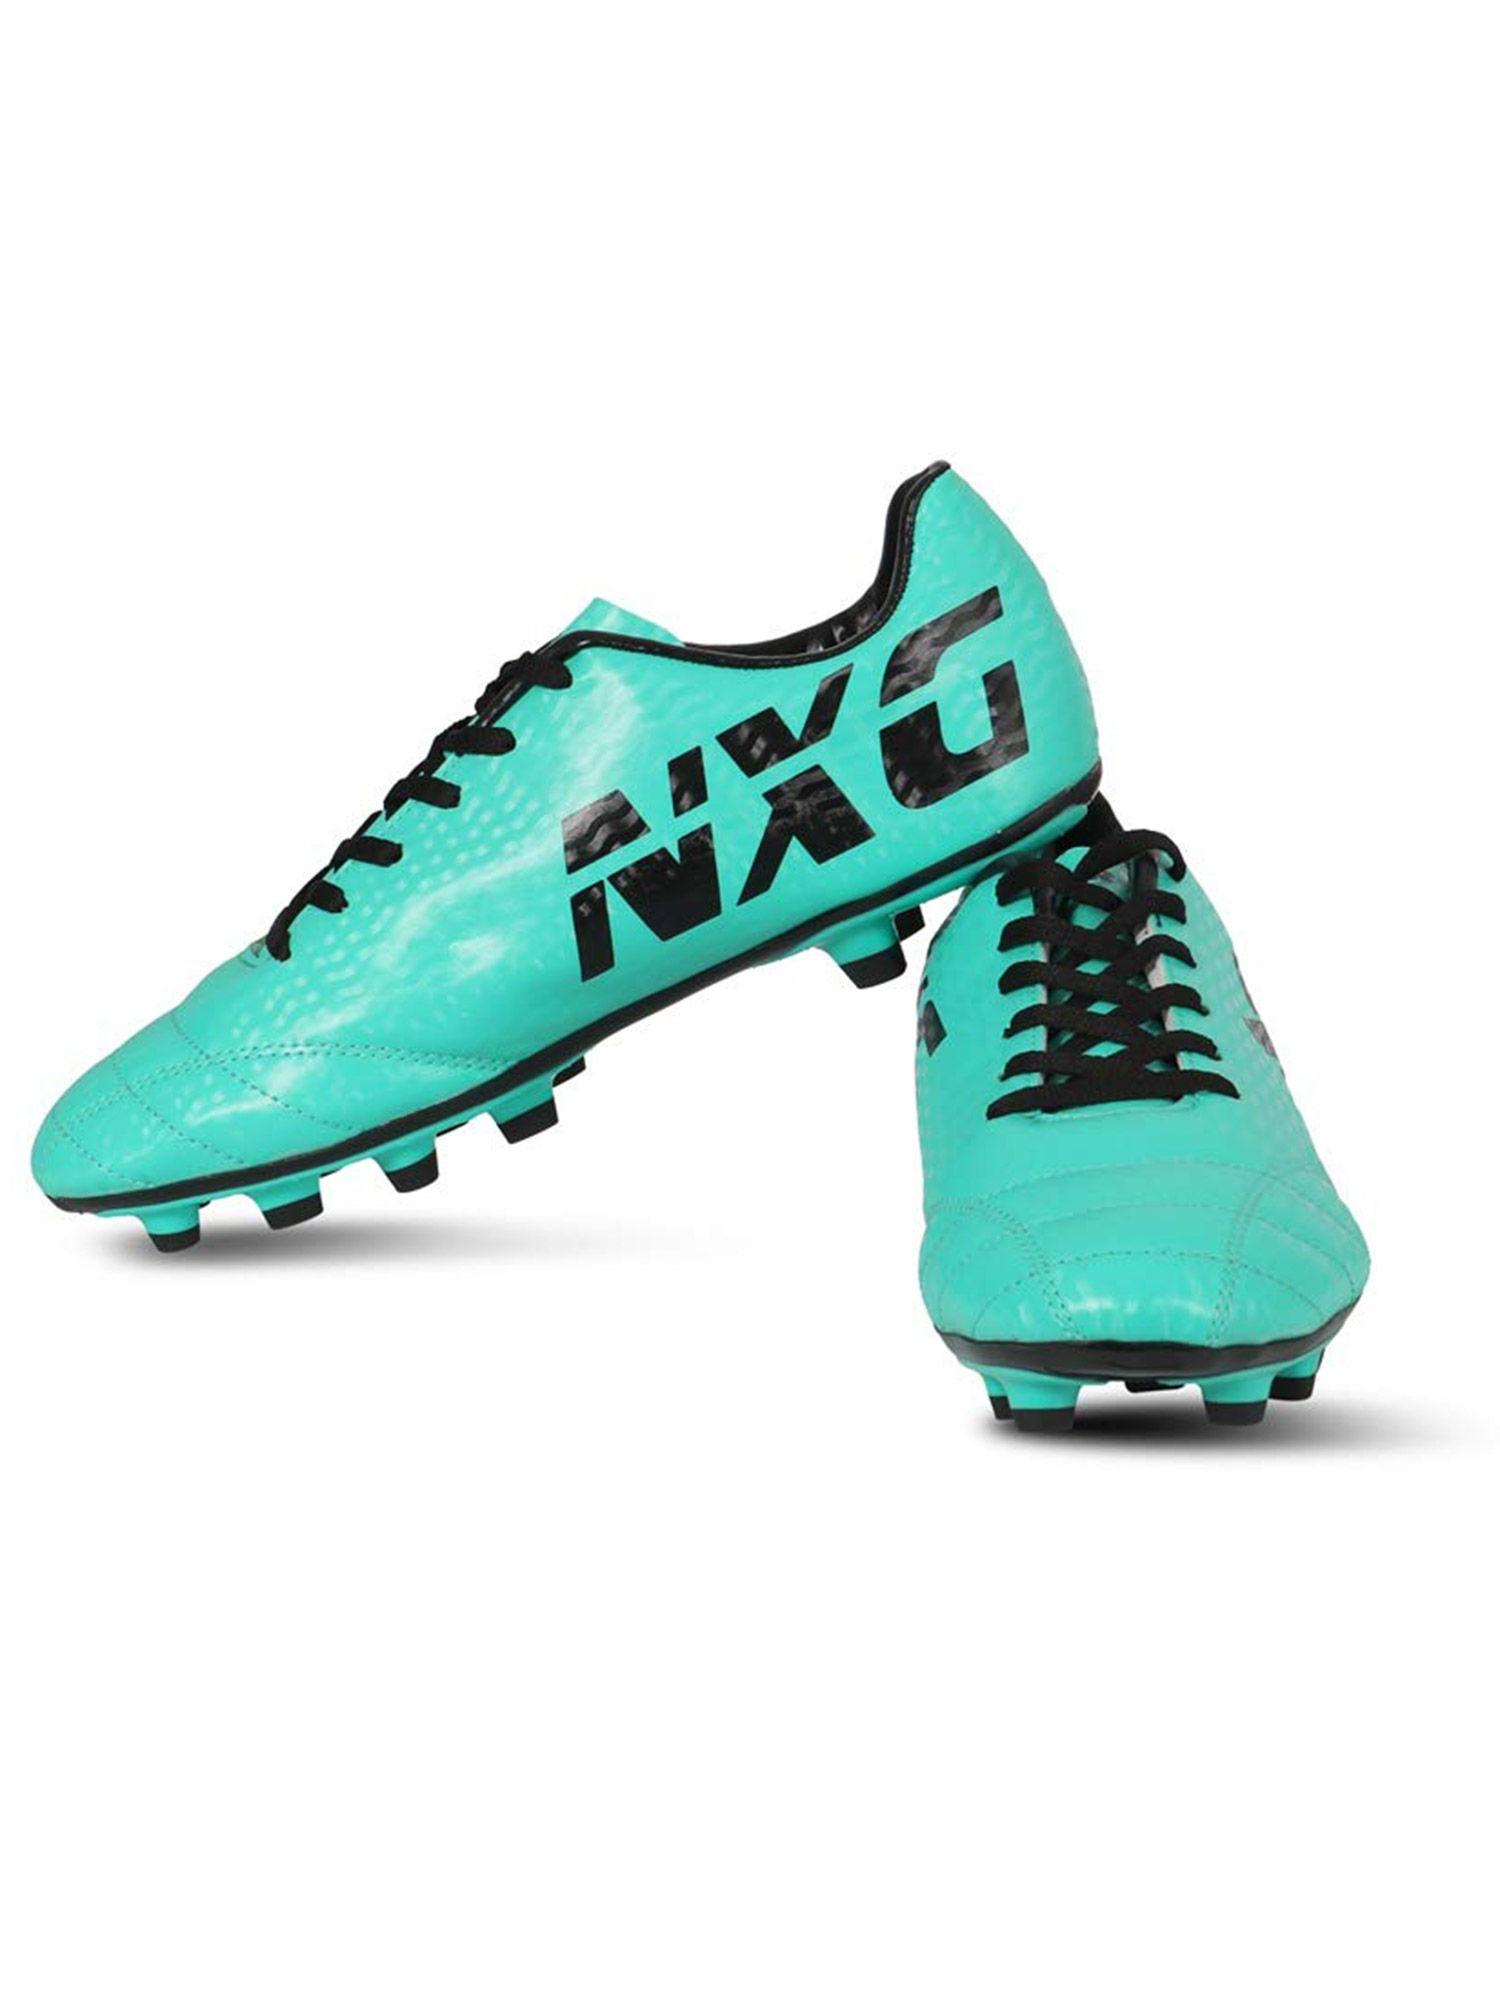 nxg football shoes for men - green